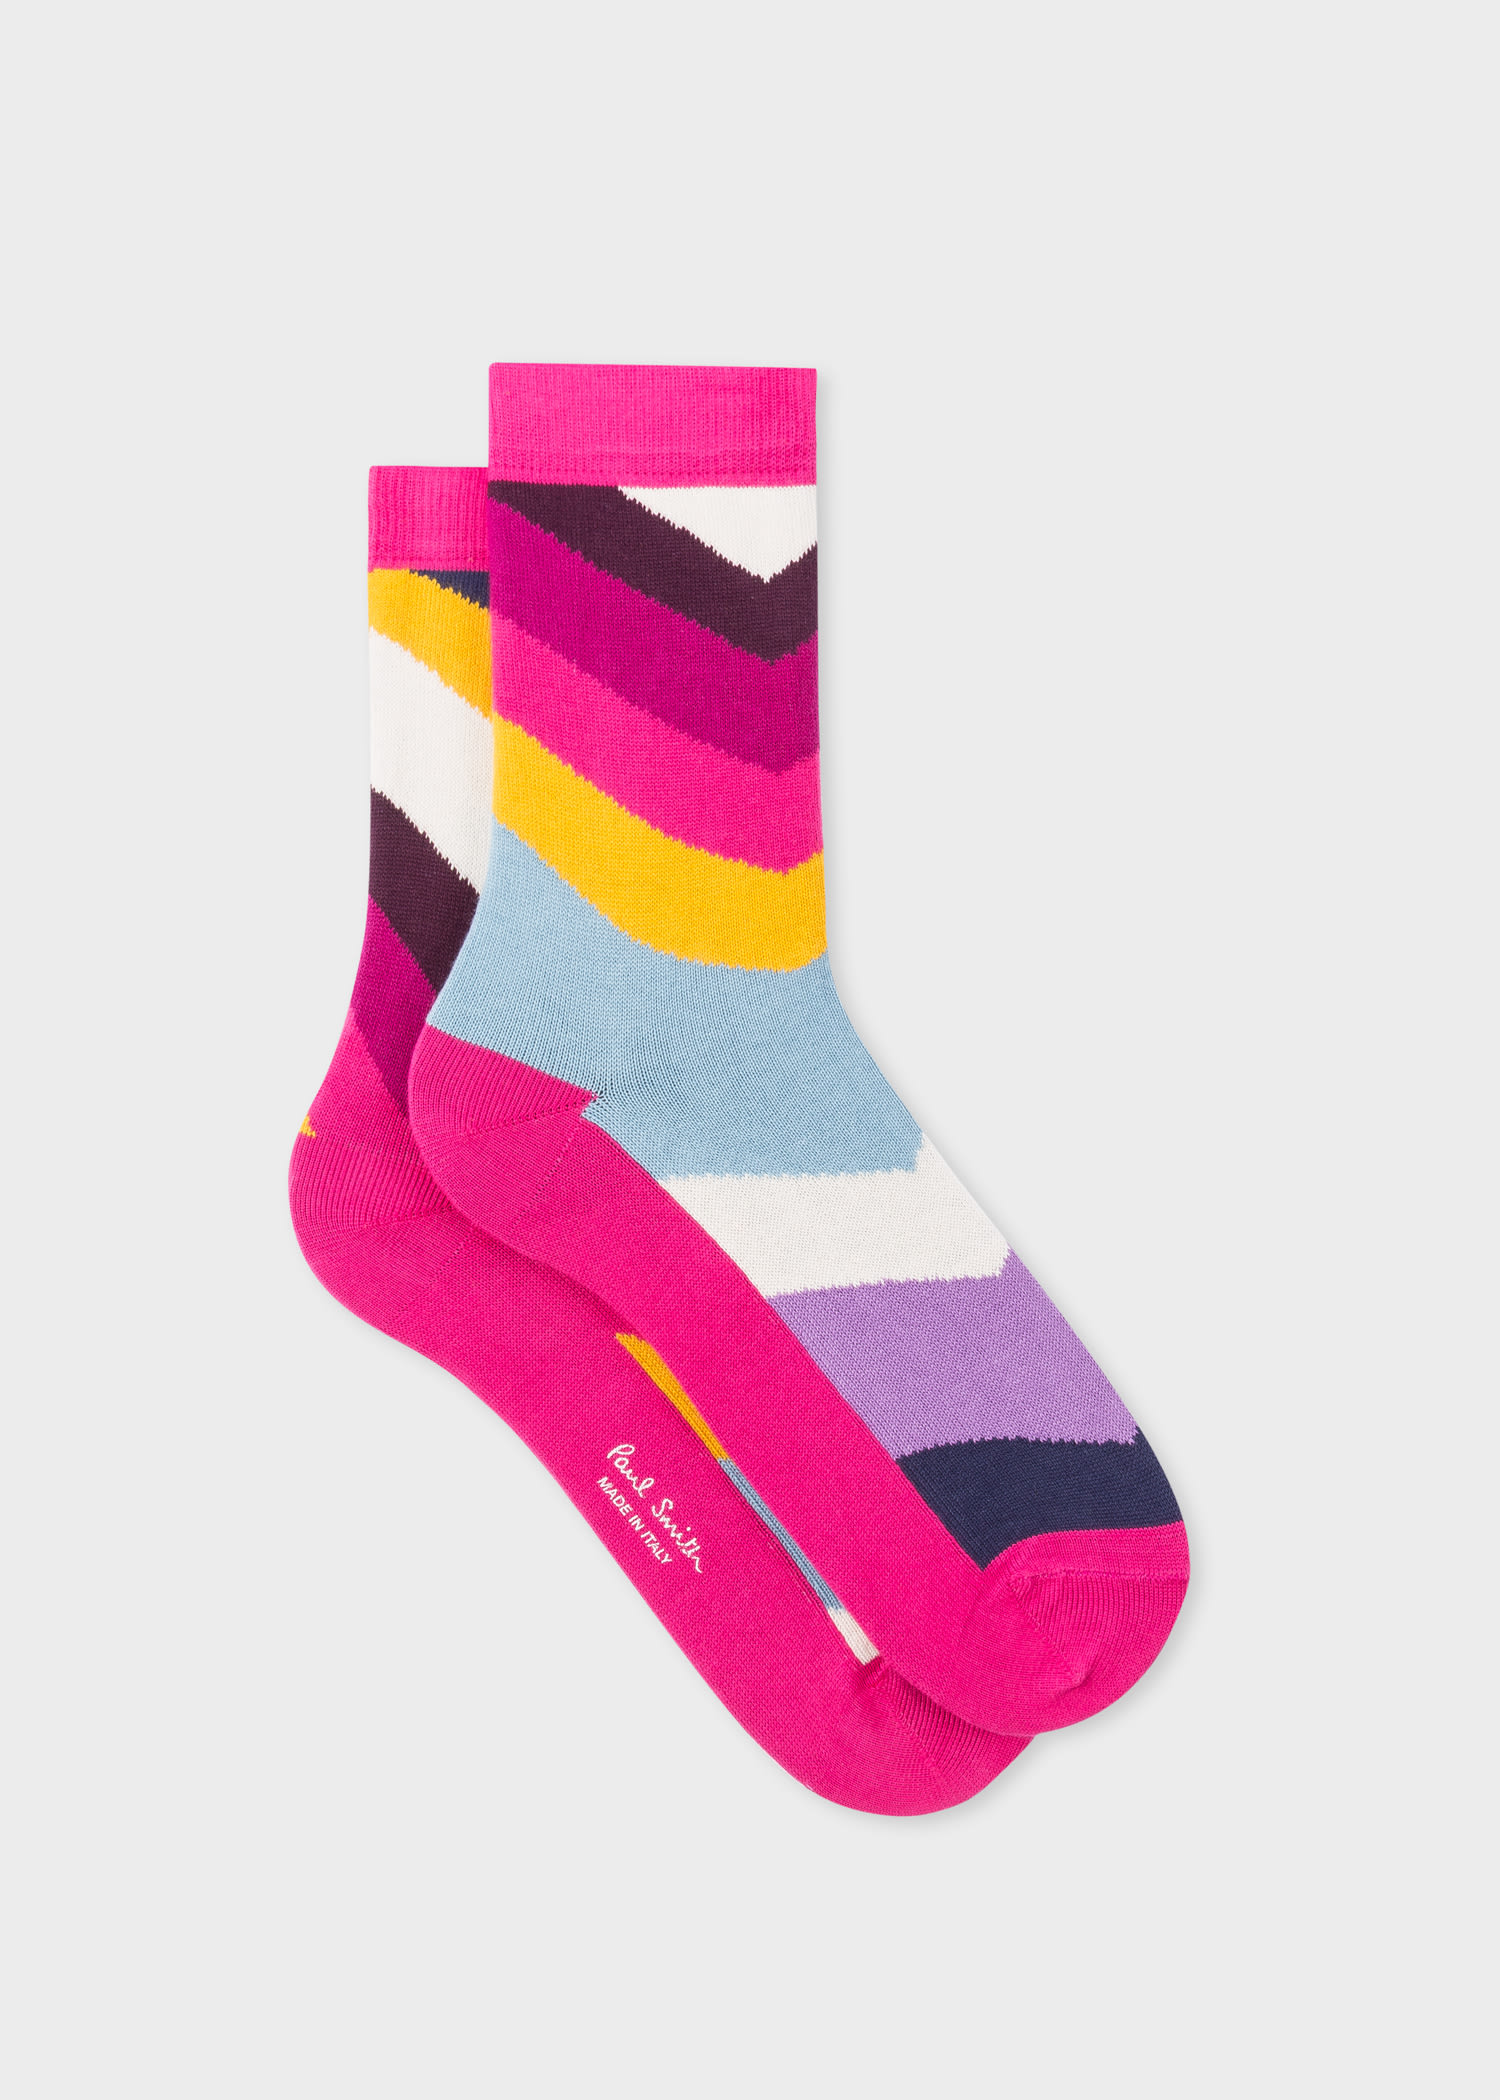 Paul Smith Mens Indigo Block Stripe Cycling Socks “L" Brand New  